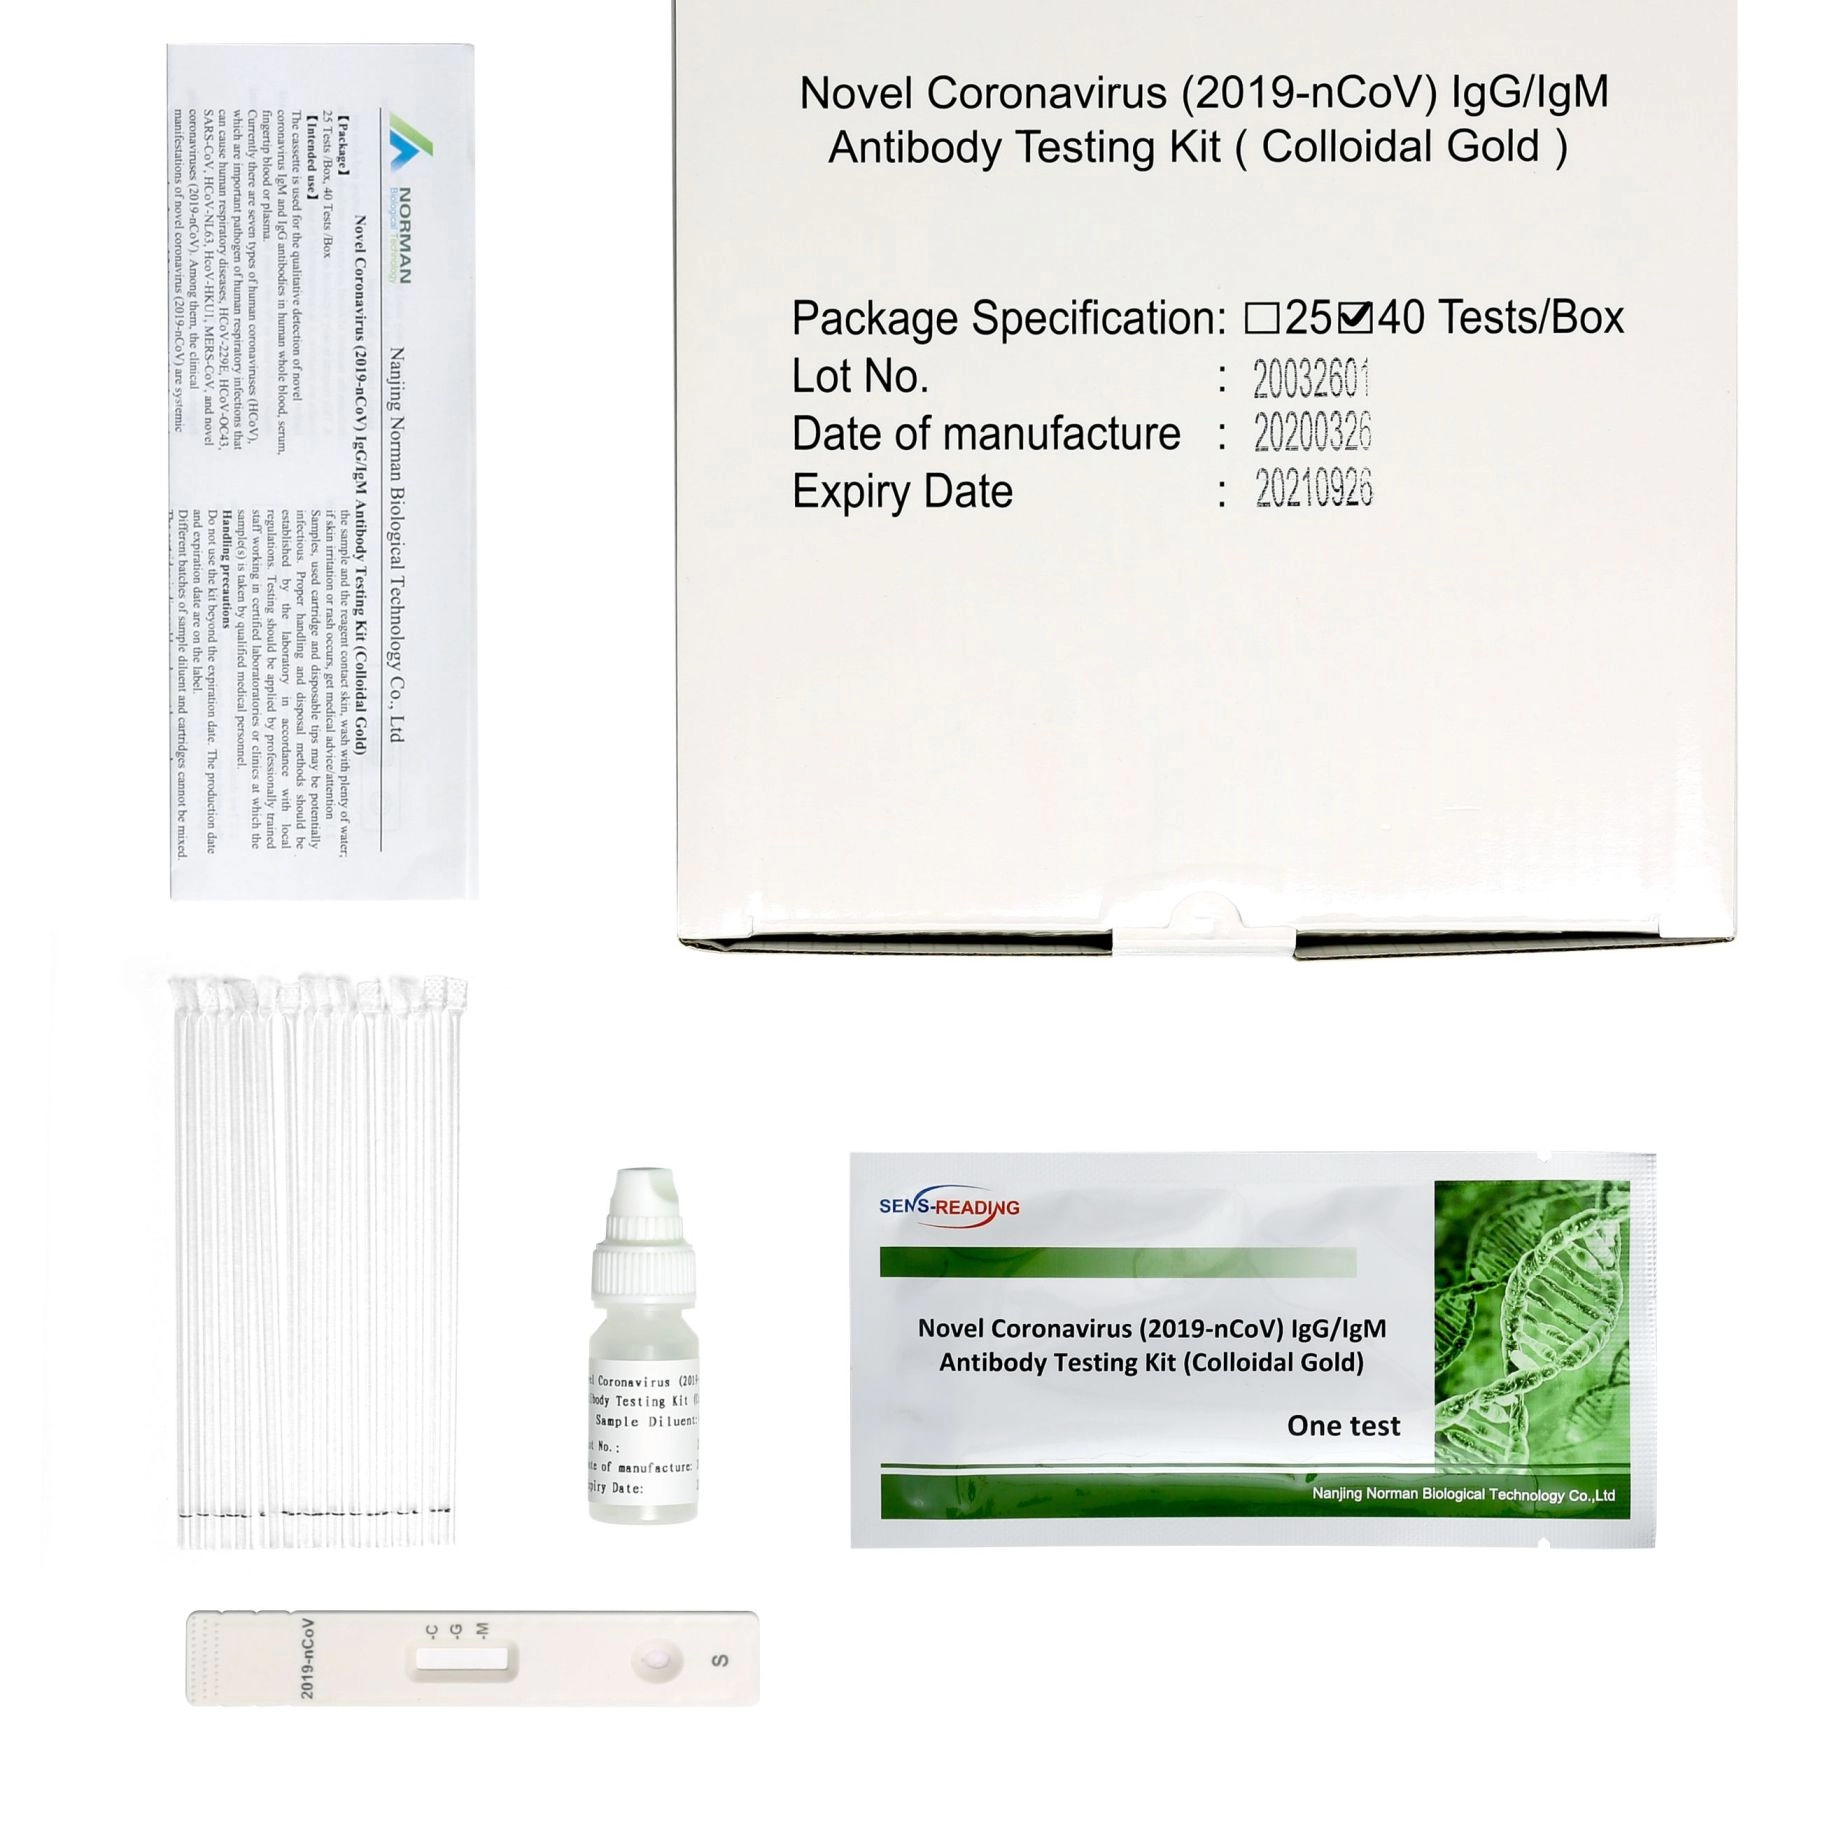 Novel Coronavirus (2019-nCoV) IgG/IgM Antibody Testing Kit (Colloidal Gold)